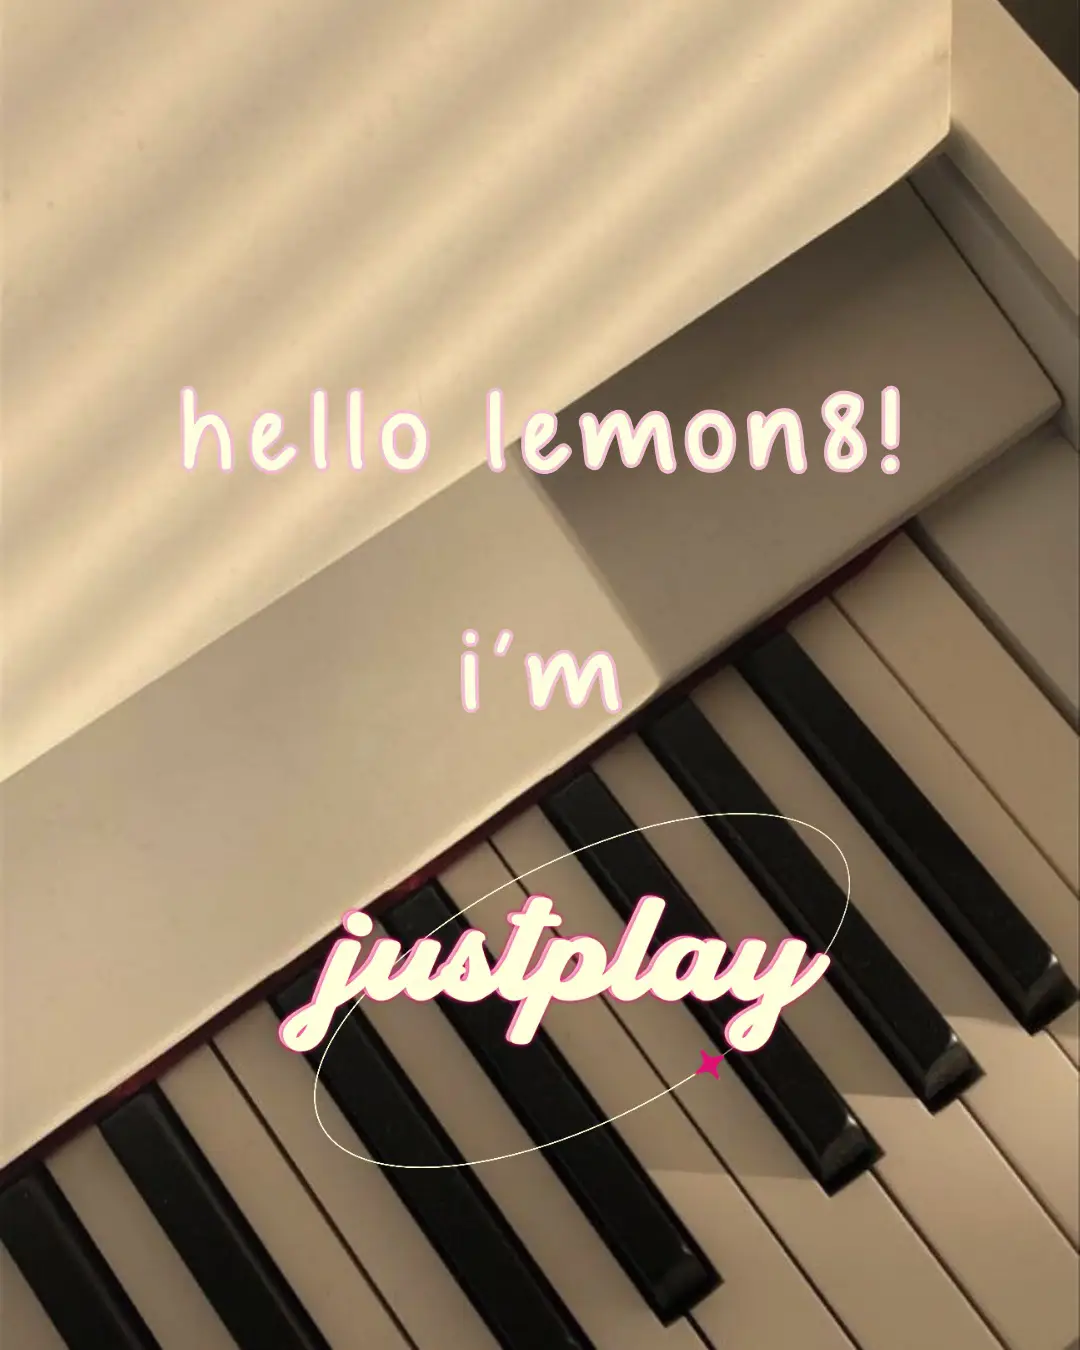 hello lemon8 & fellow musicians 🫶🏻🎶's images